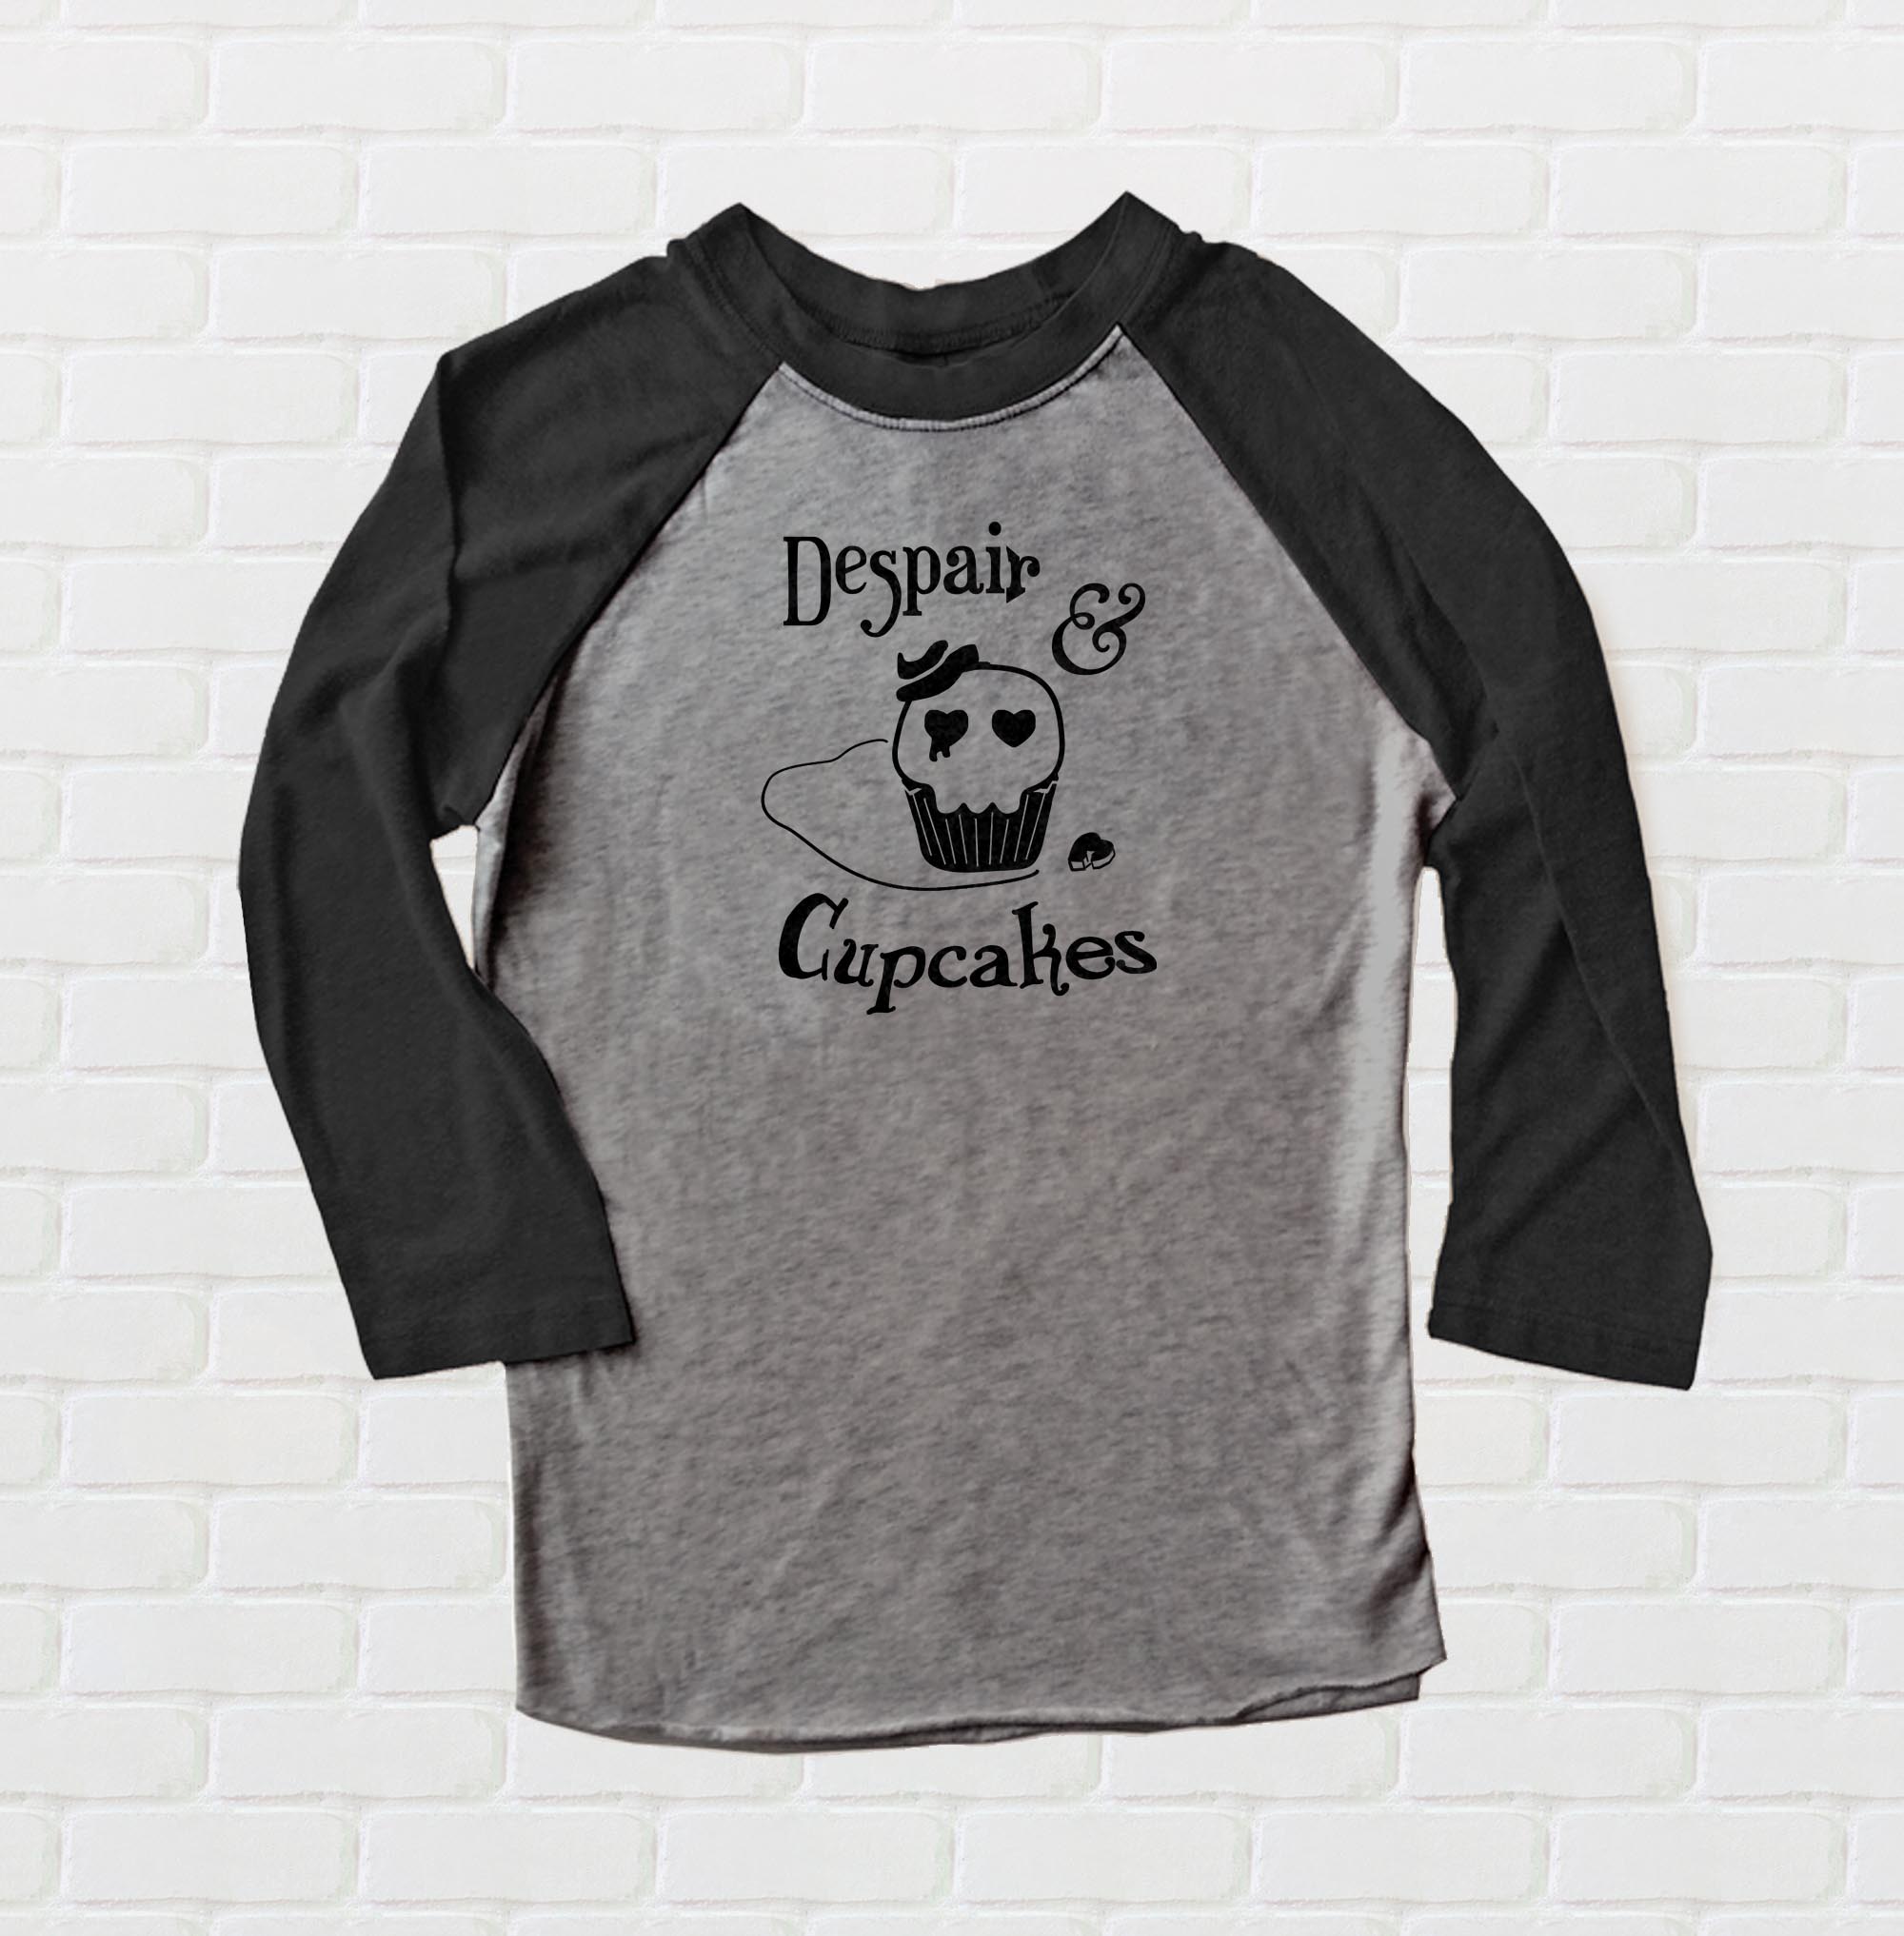 Despair and Cupcakes Raglan T-shirt 3/4 Sleeve - Grey/Black